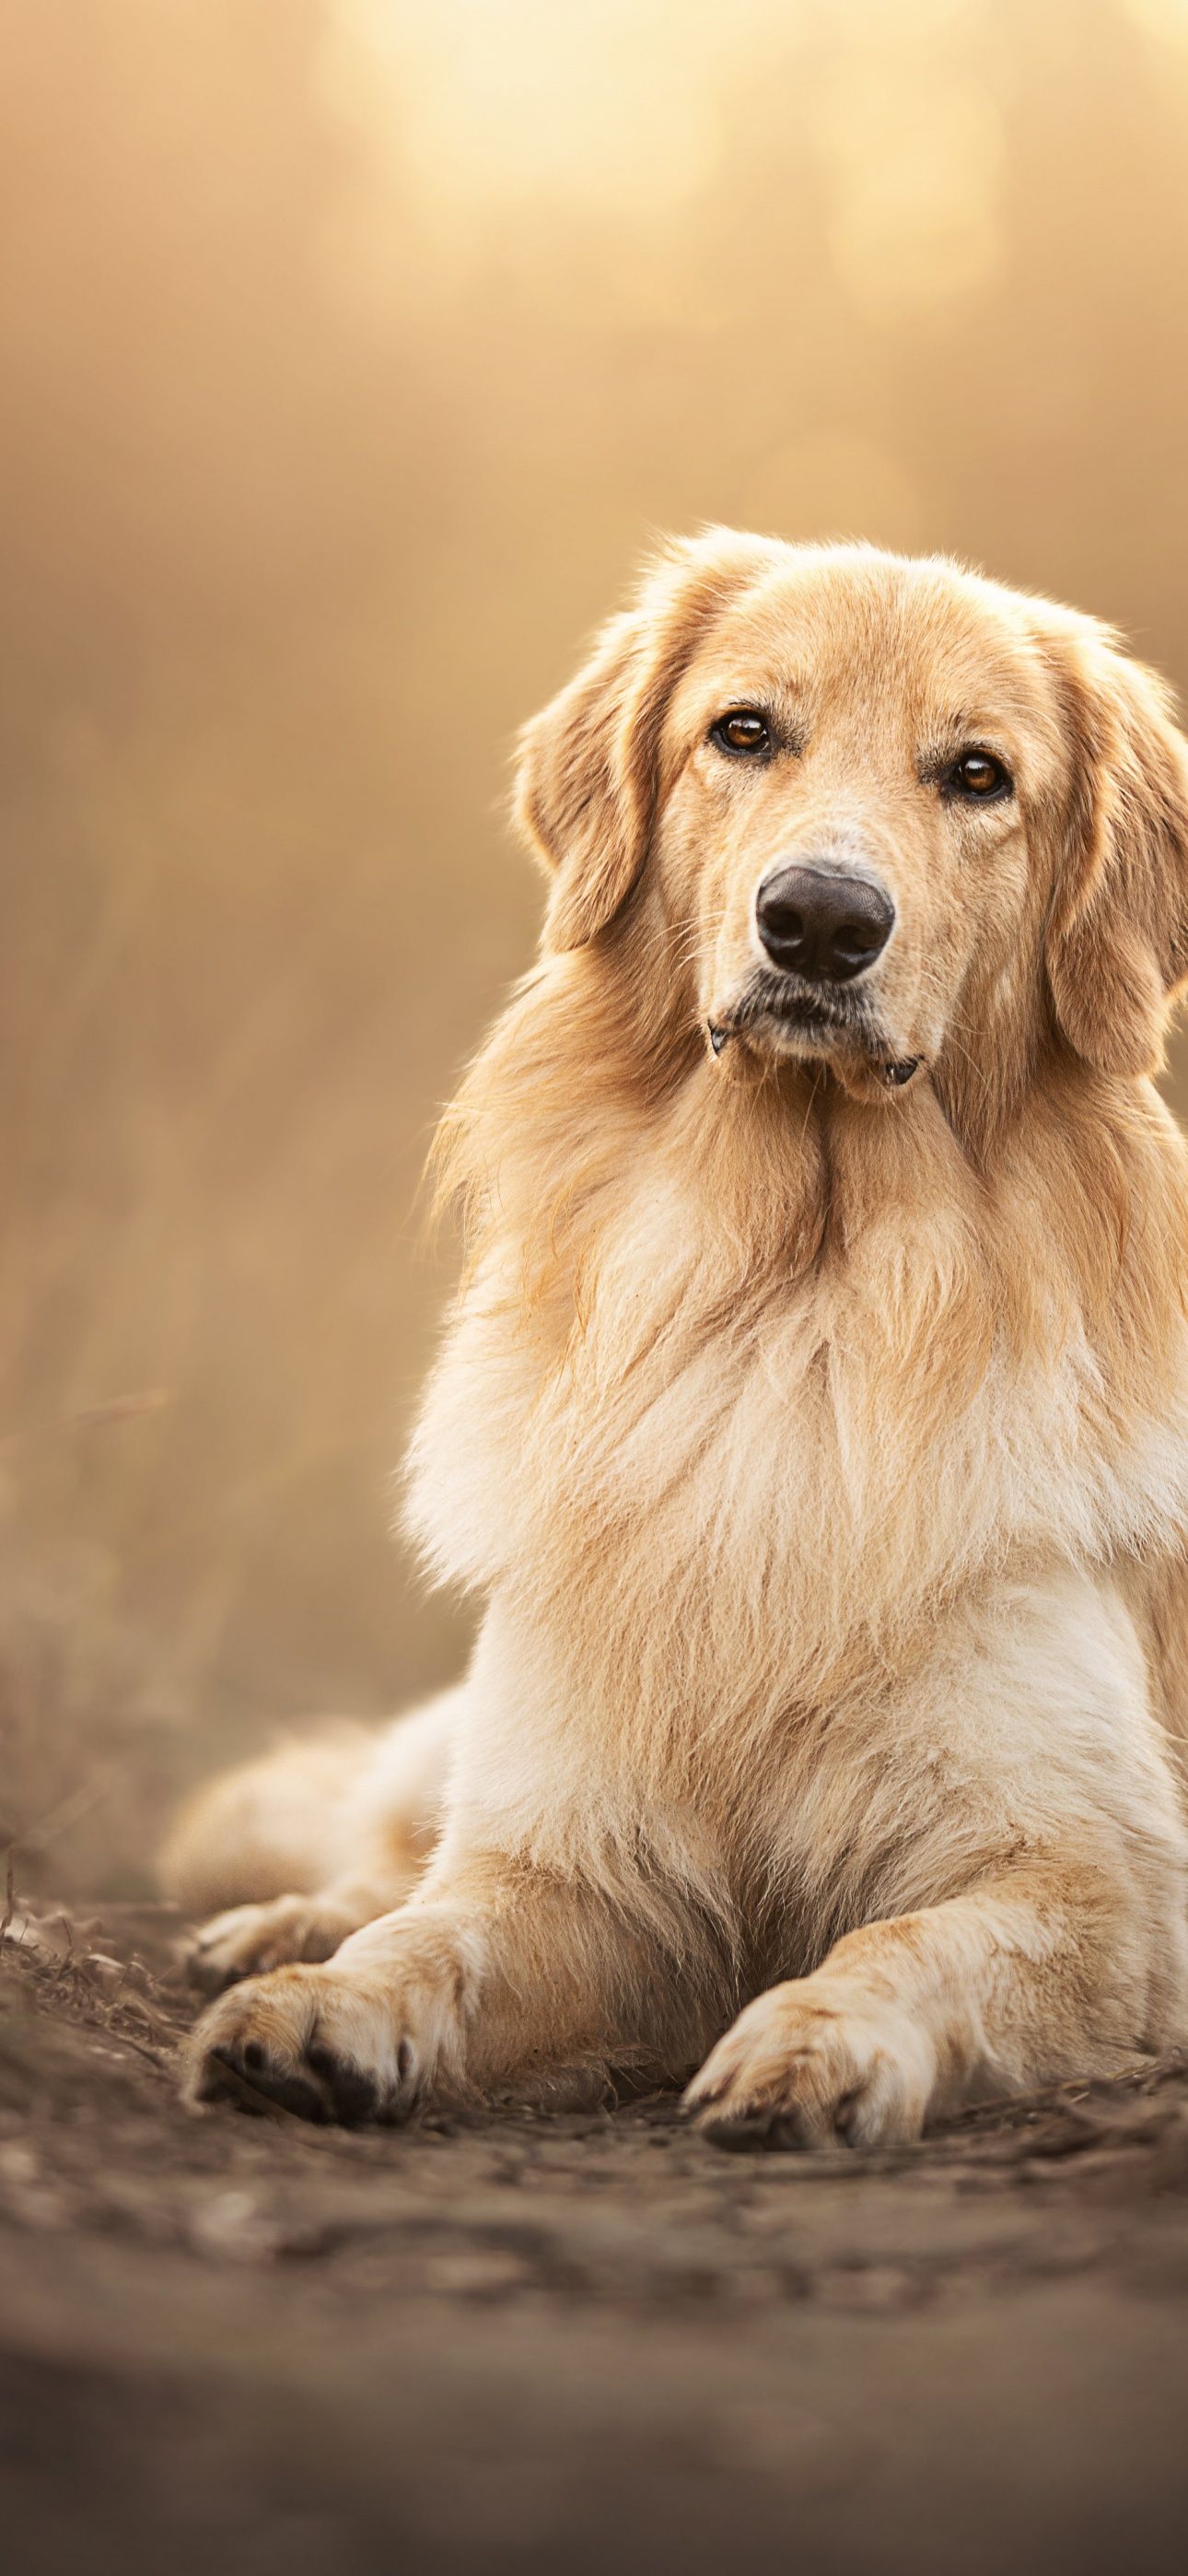  Golden Retriever Hintergrundbild 1290x2796. Golden Retriever Wallpaper 4K, Scottish breed dog, Pet dog, 5K